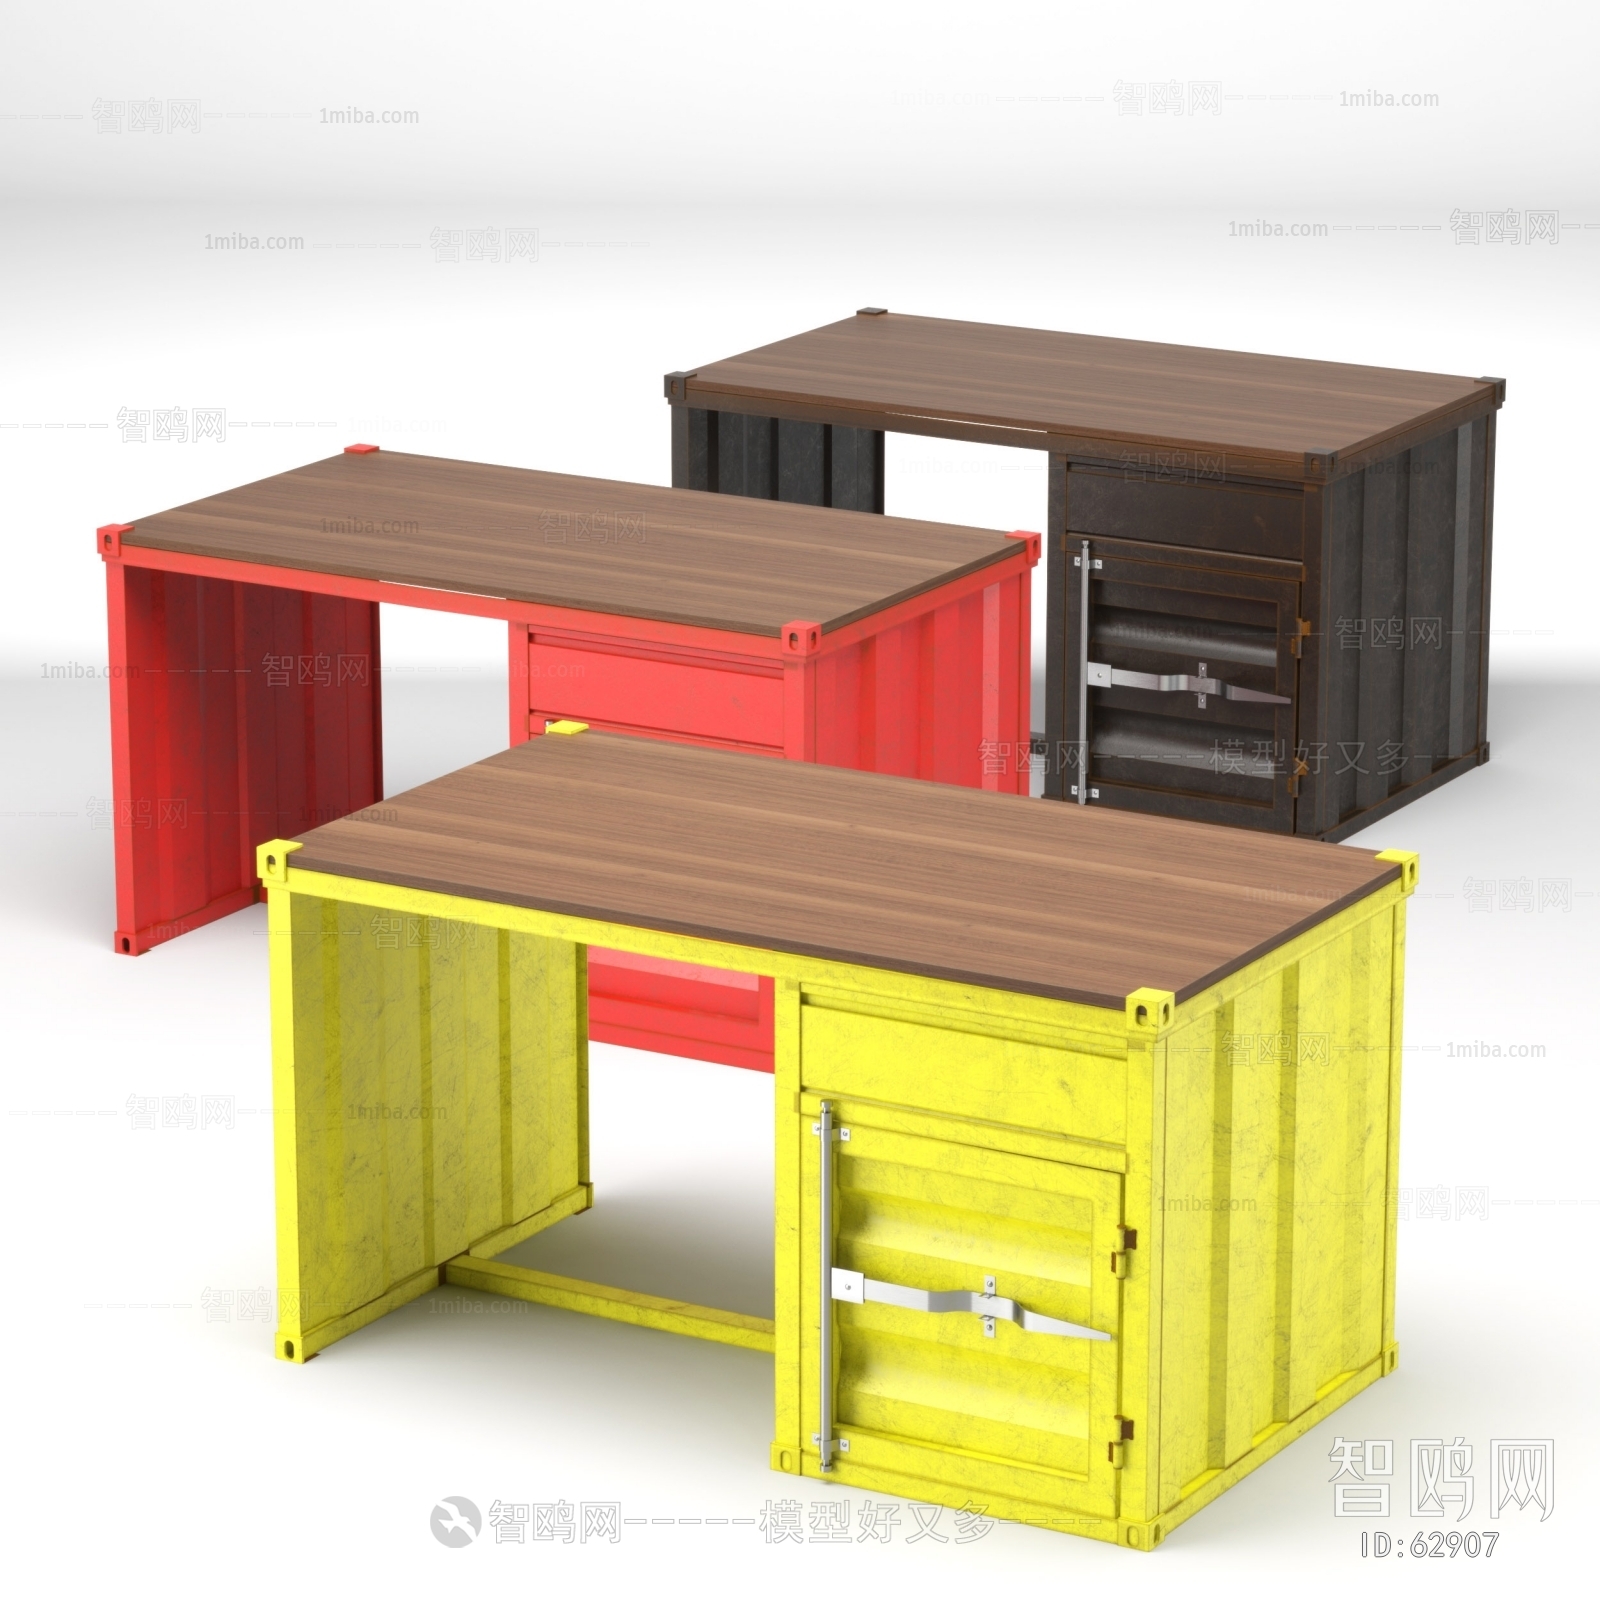 Industrial Style Desk